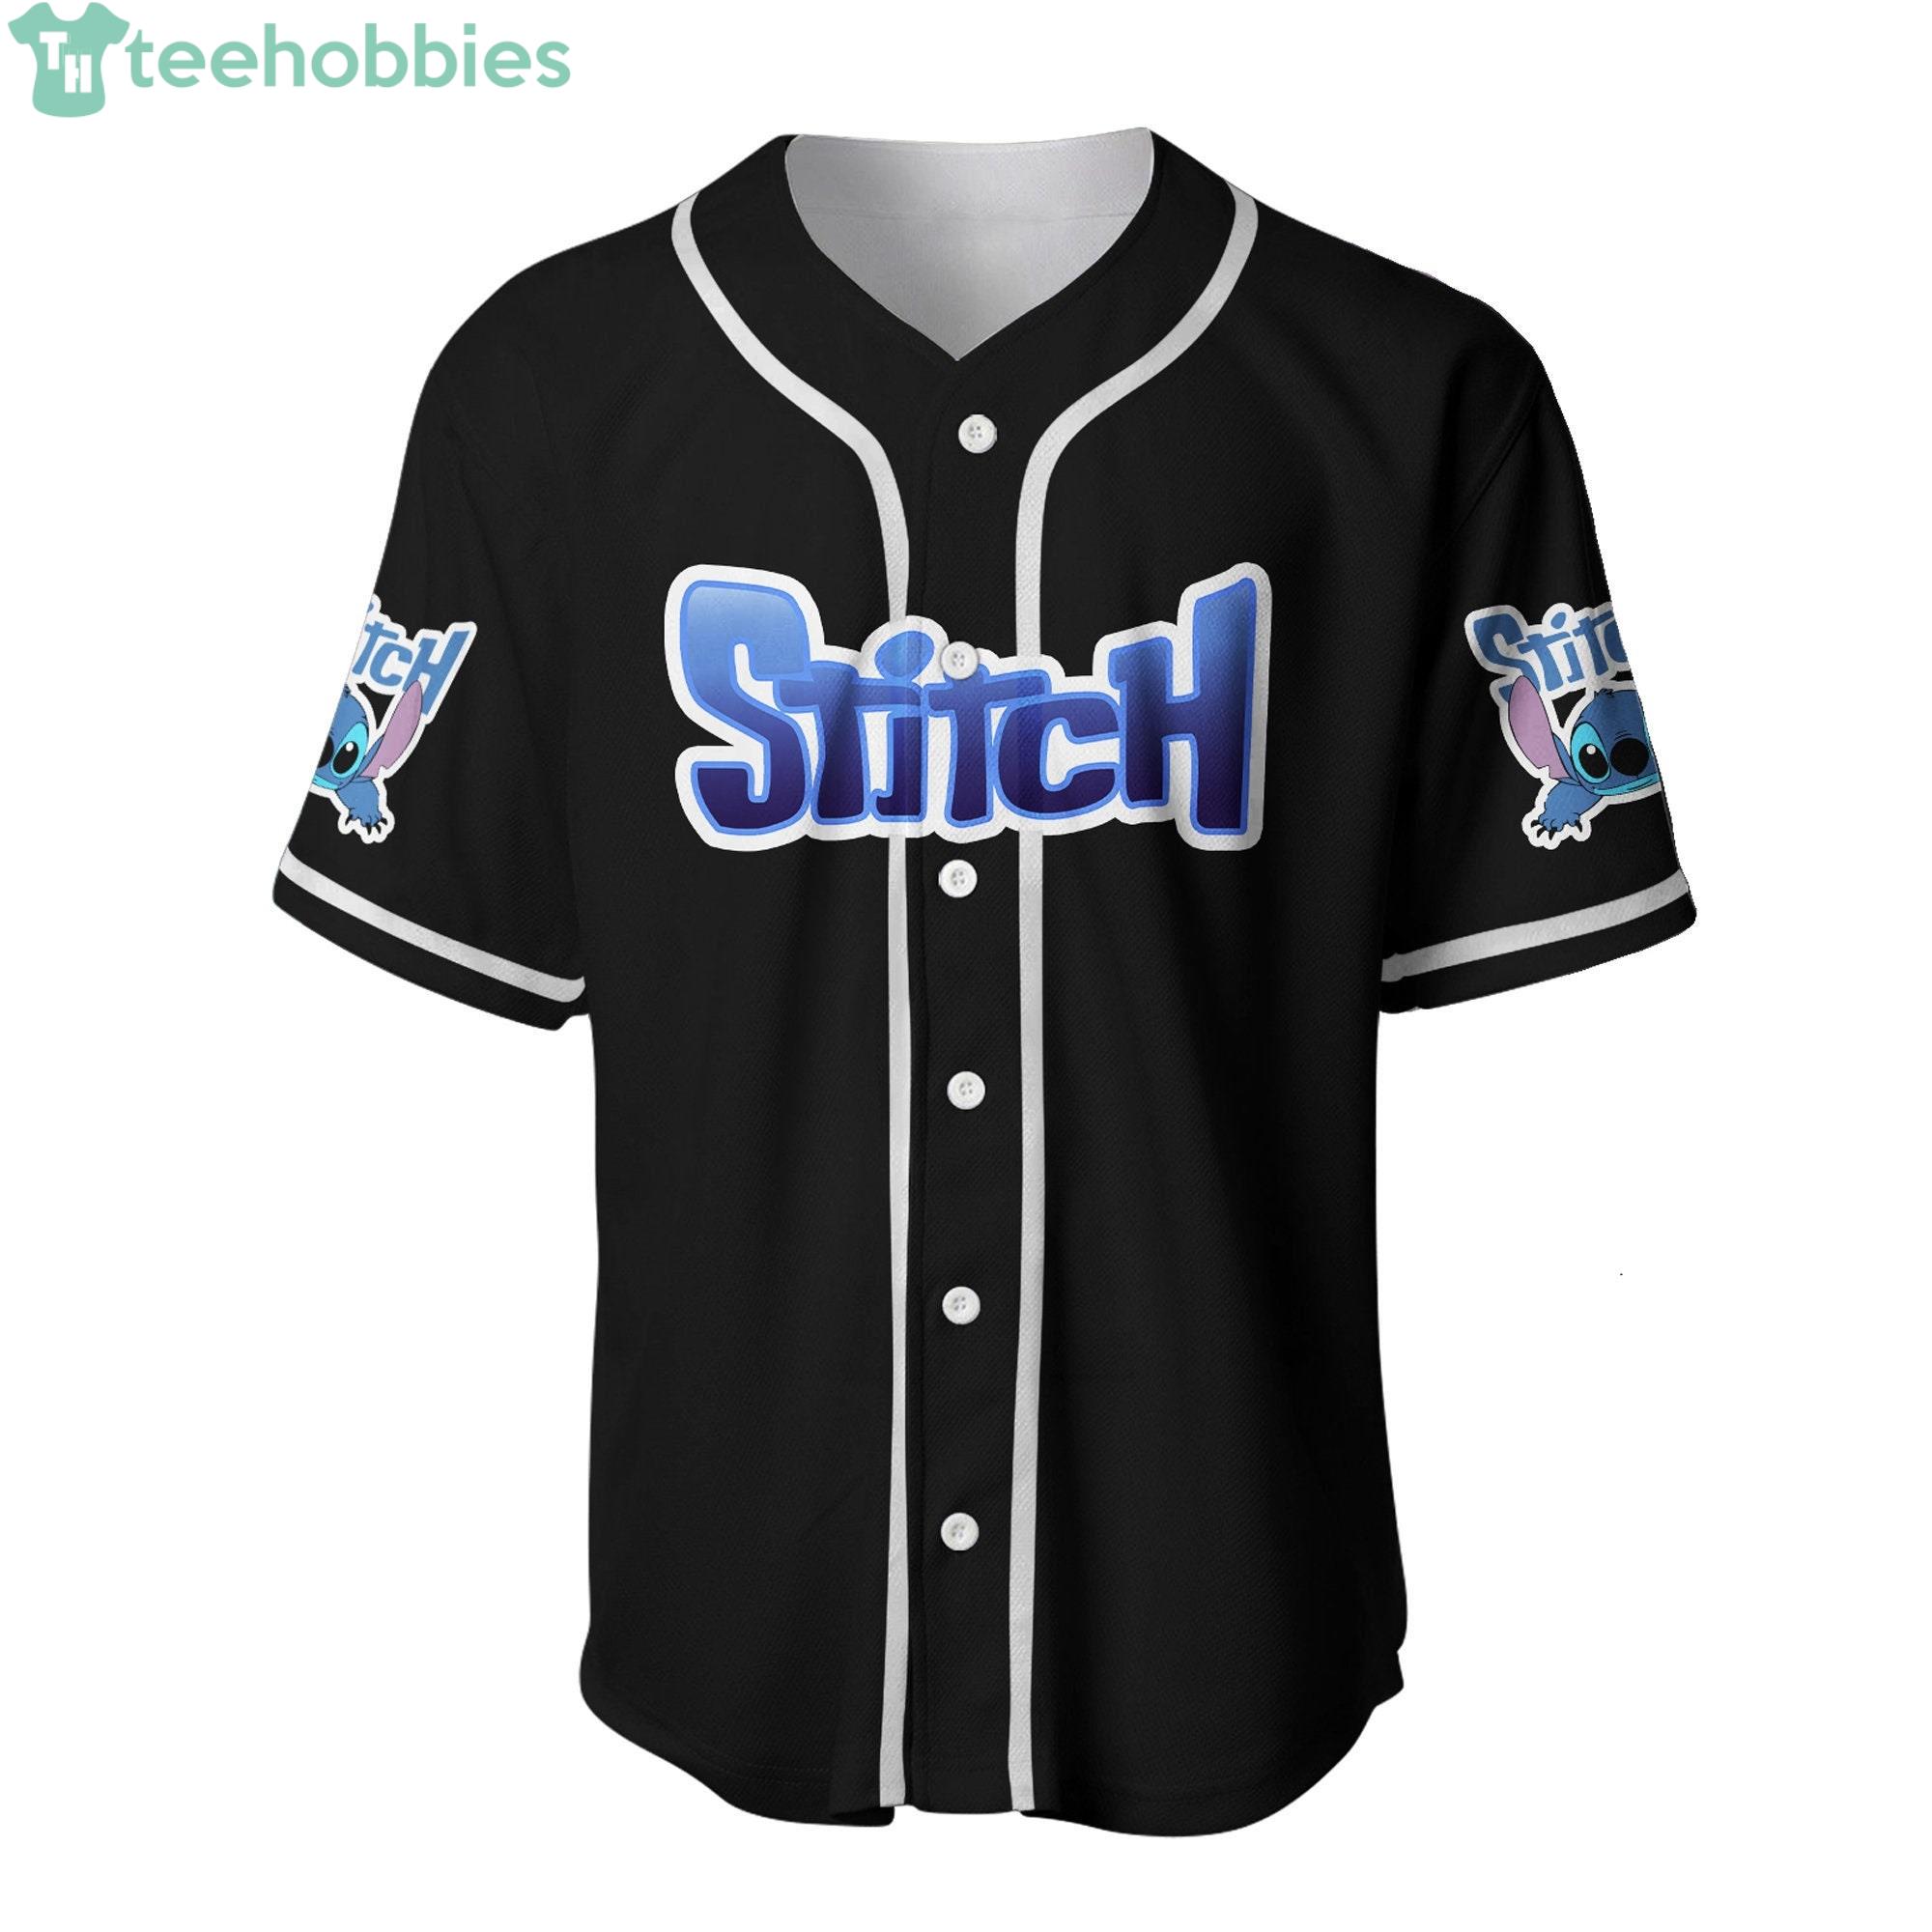 Stitch Cartoon All Over Print Custom Name Baseball Jersey Shirt